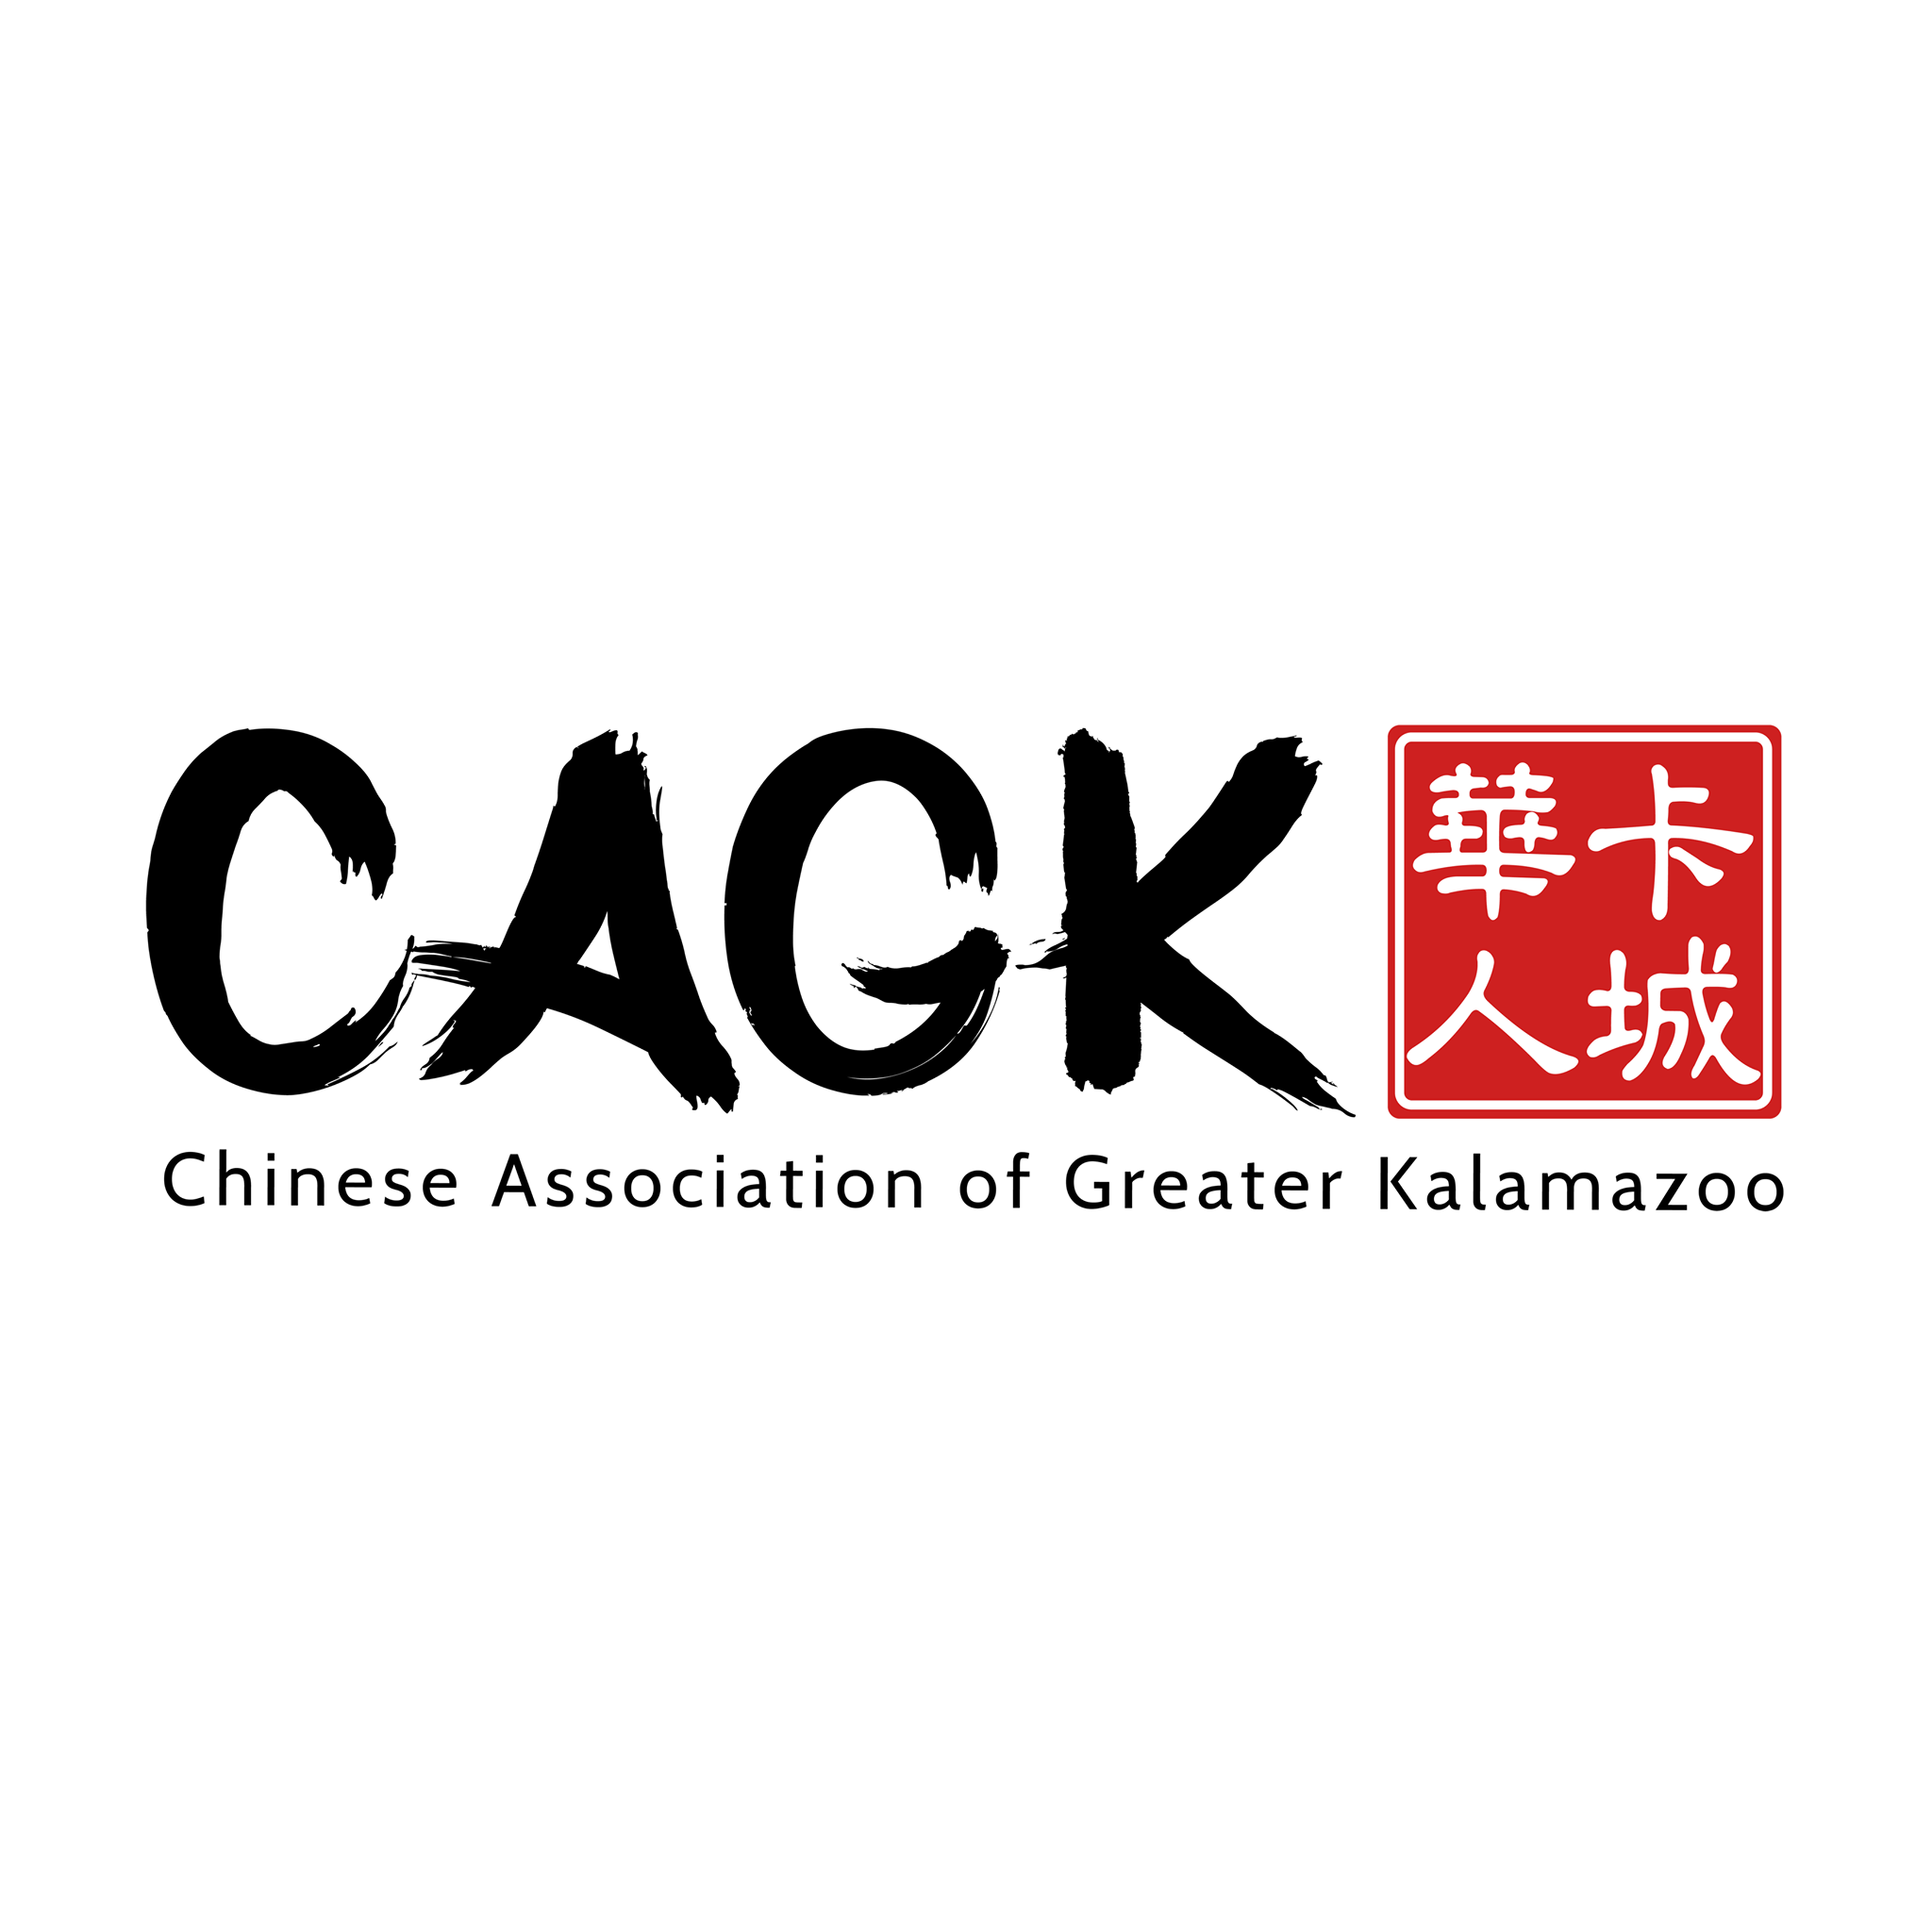 Chinese Organizations in Detroit Michigan - Chinese Association of Greater Kalamazoo